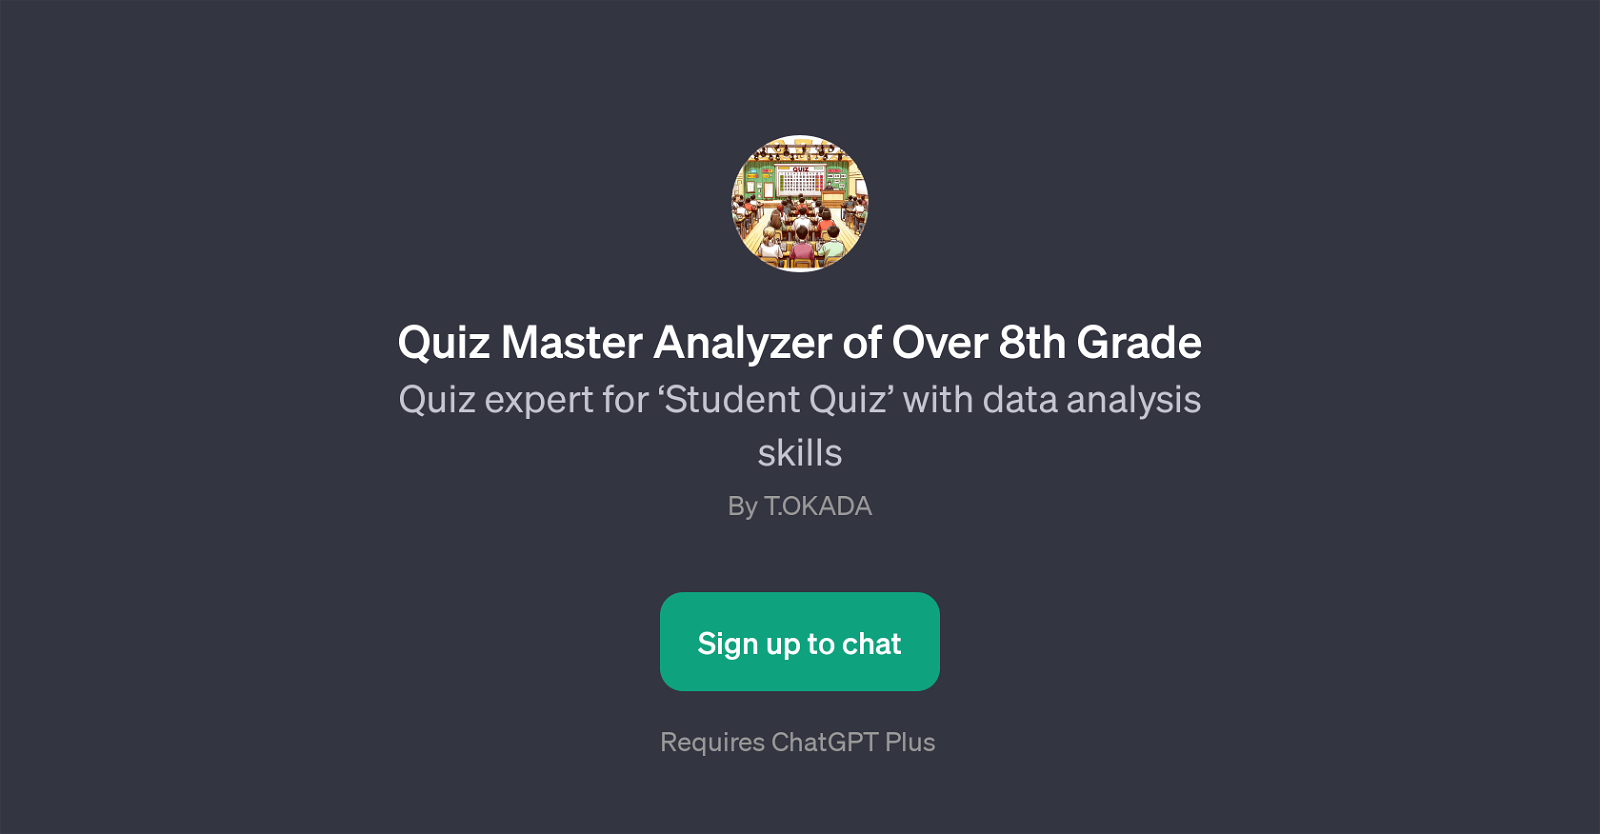 Quiz Master Analyzer of Over 8th Grade website